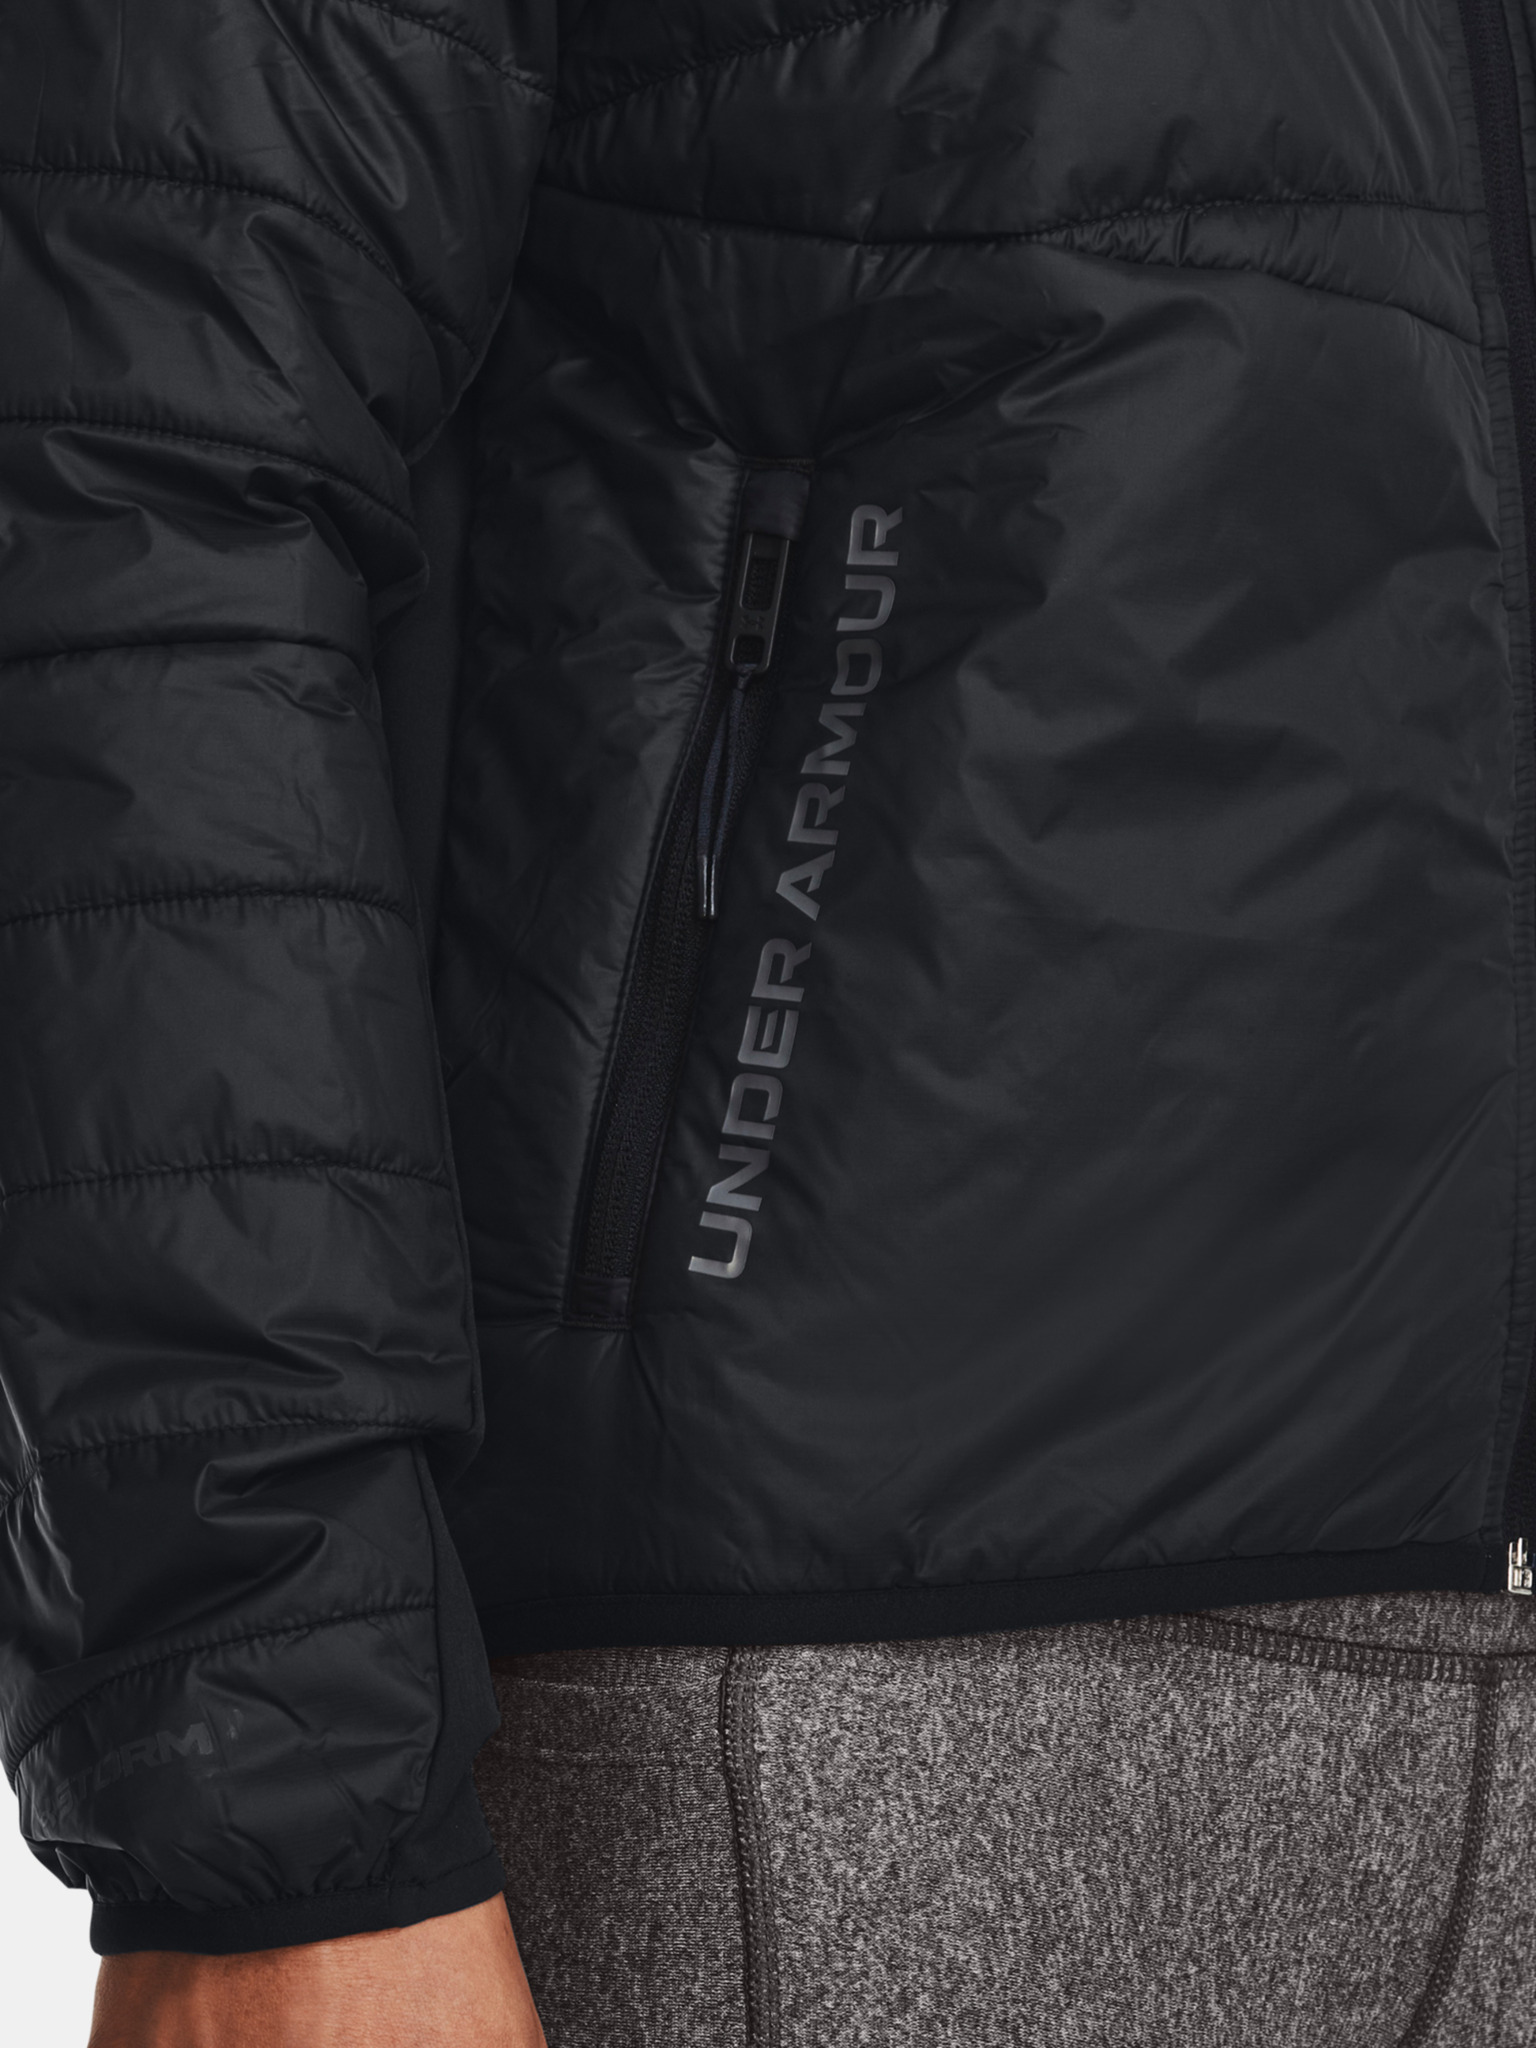 Men's UA Active Hybrid Jacket